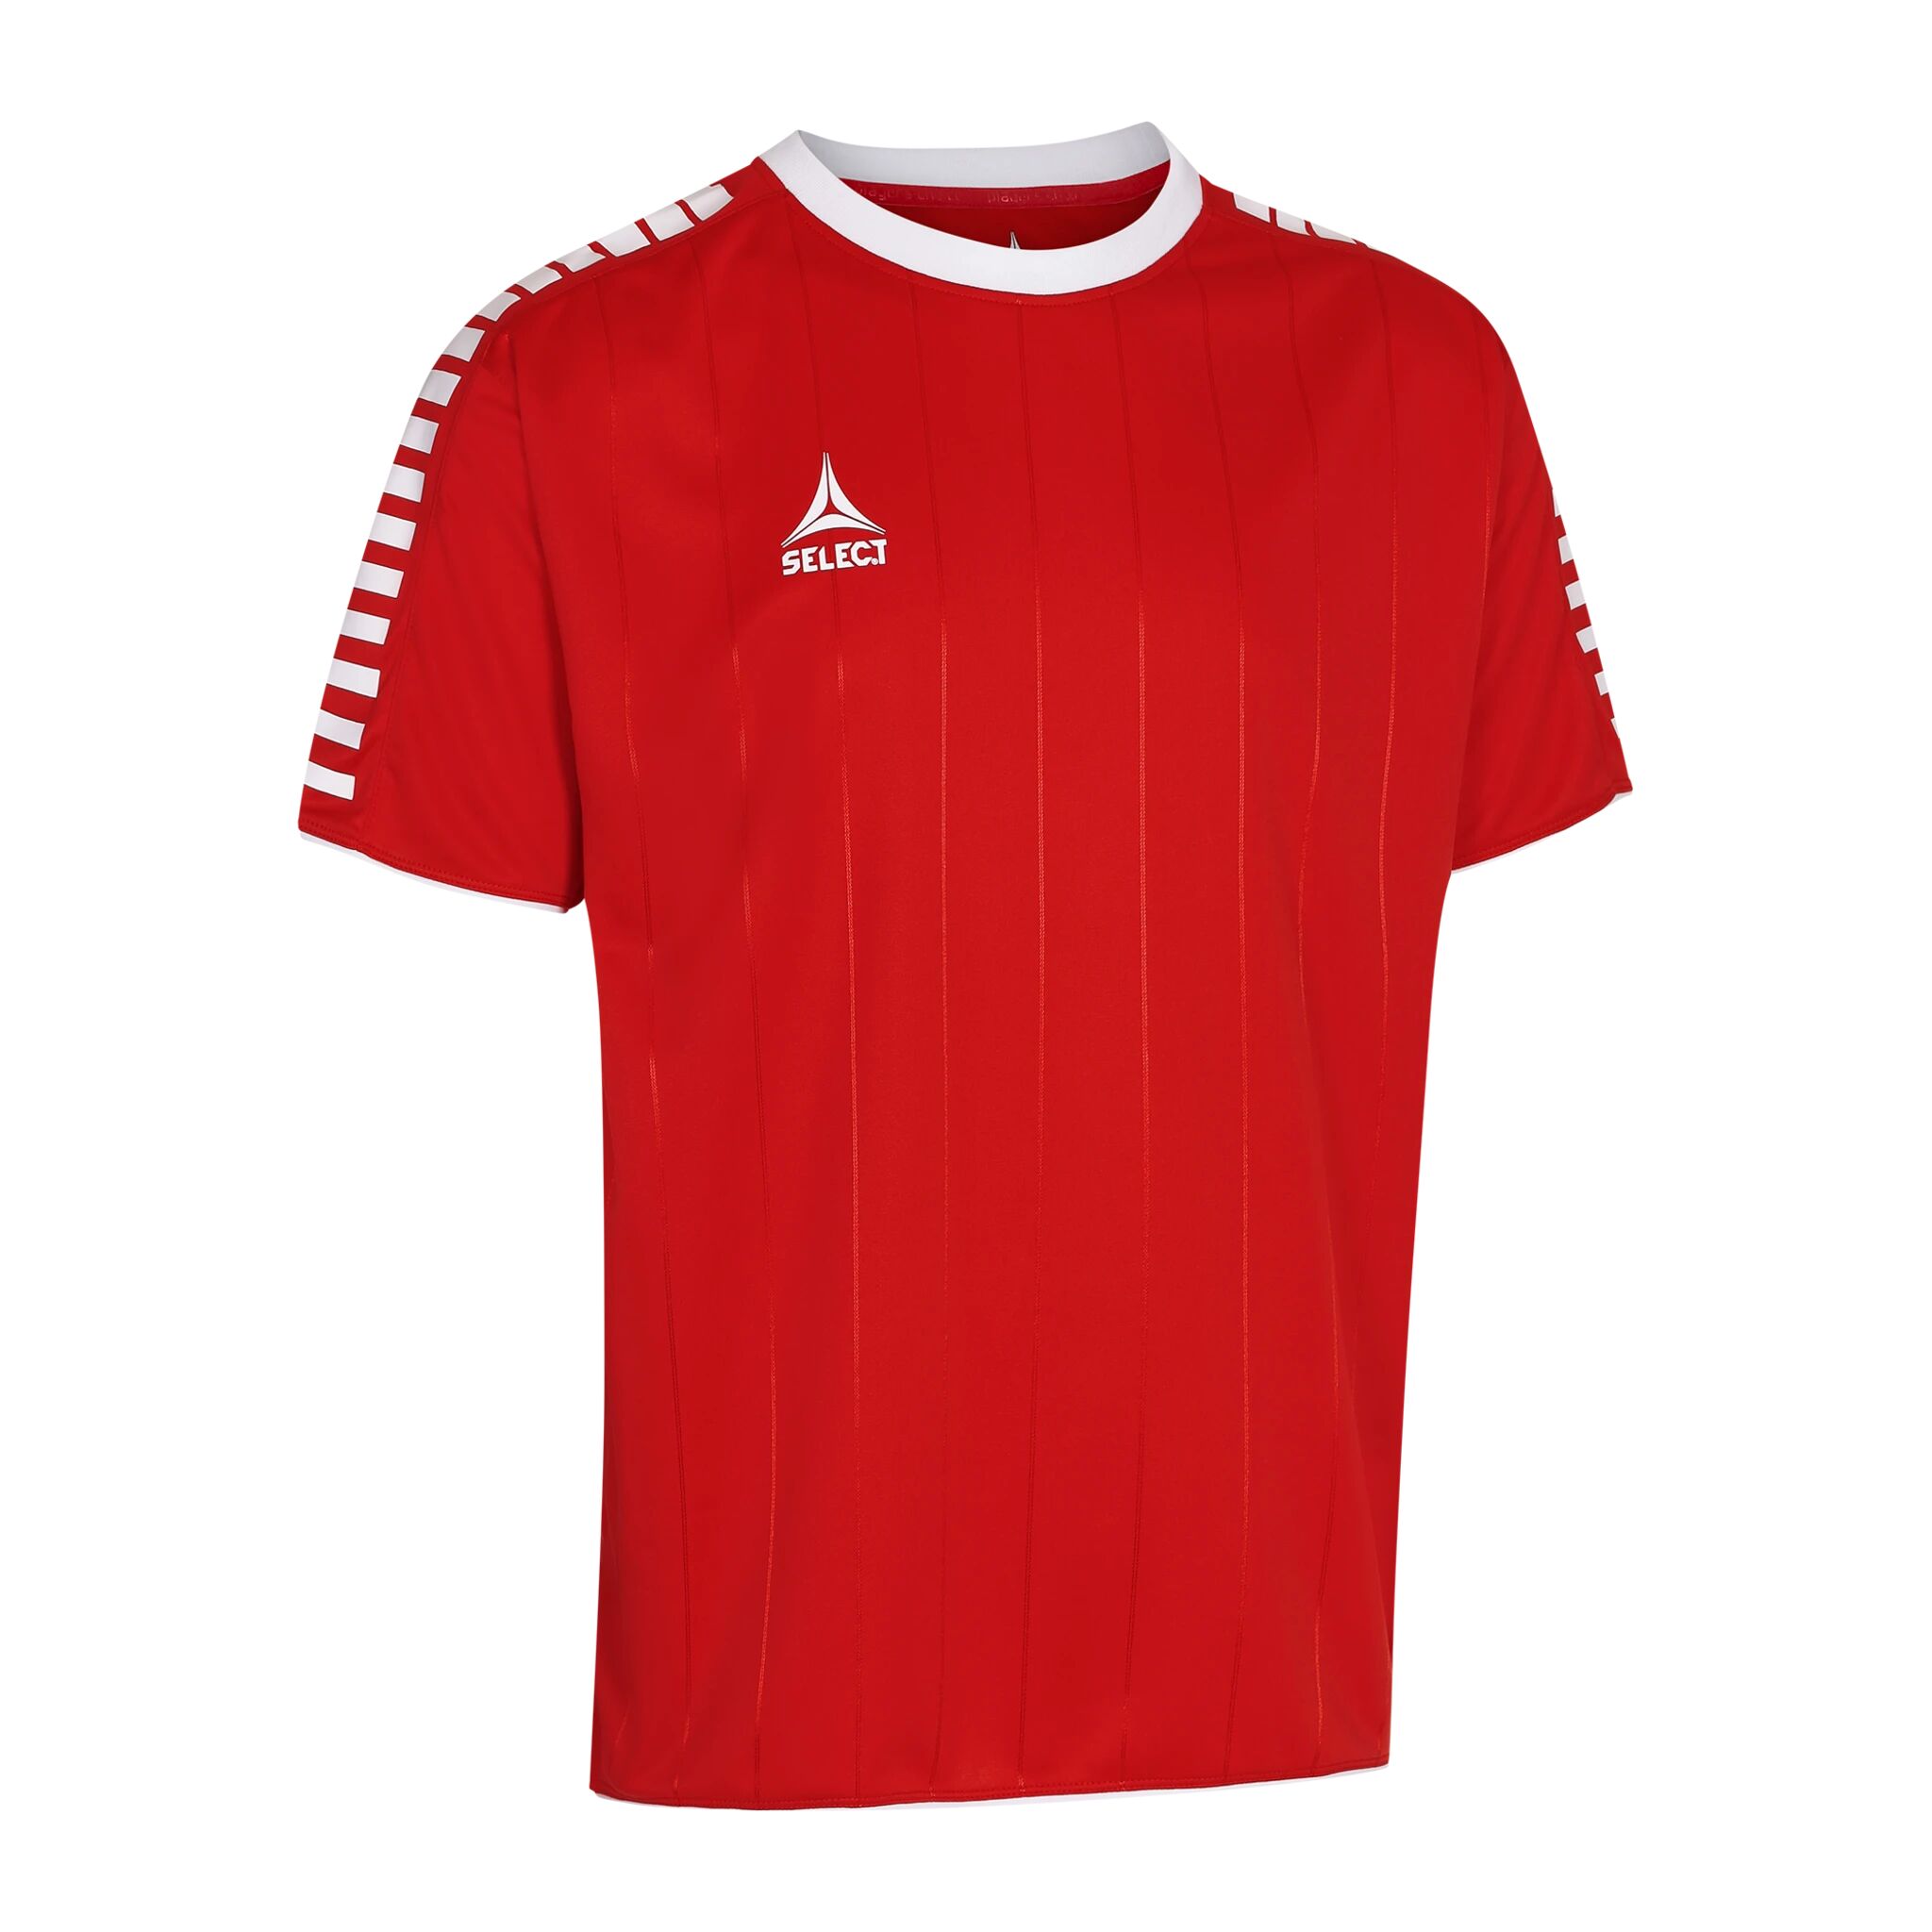 Select Player shirt S/S Argentina, fotballtrøye senior XL RED